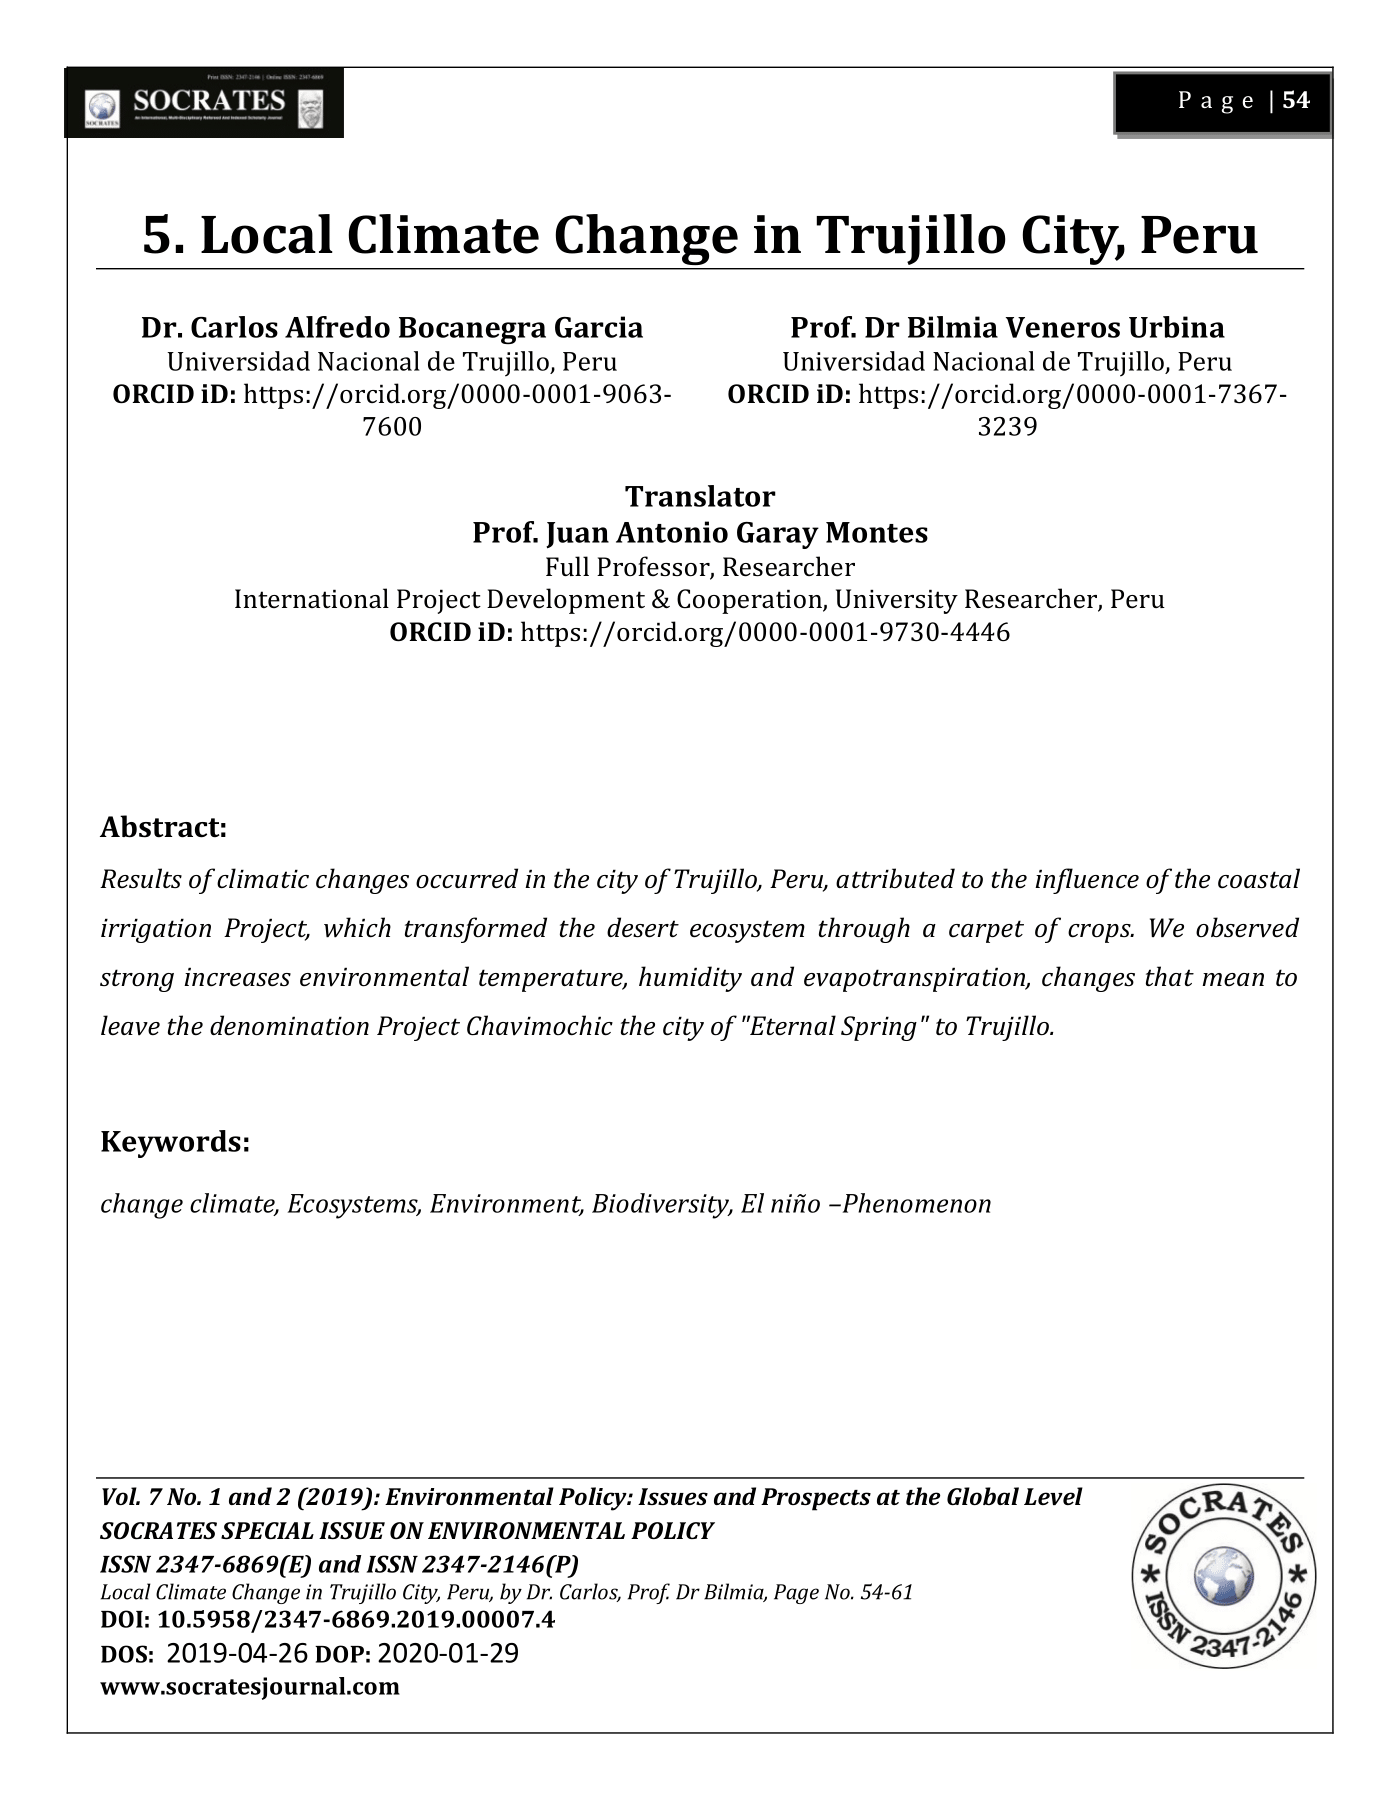 Local Climate Change in Trujillo City, Peru